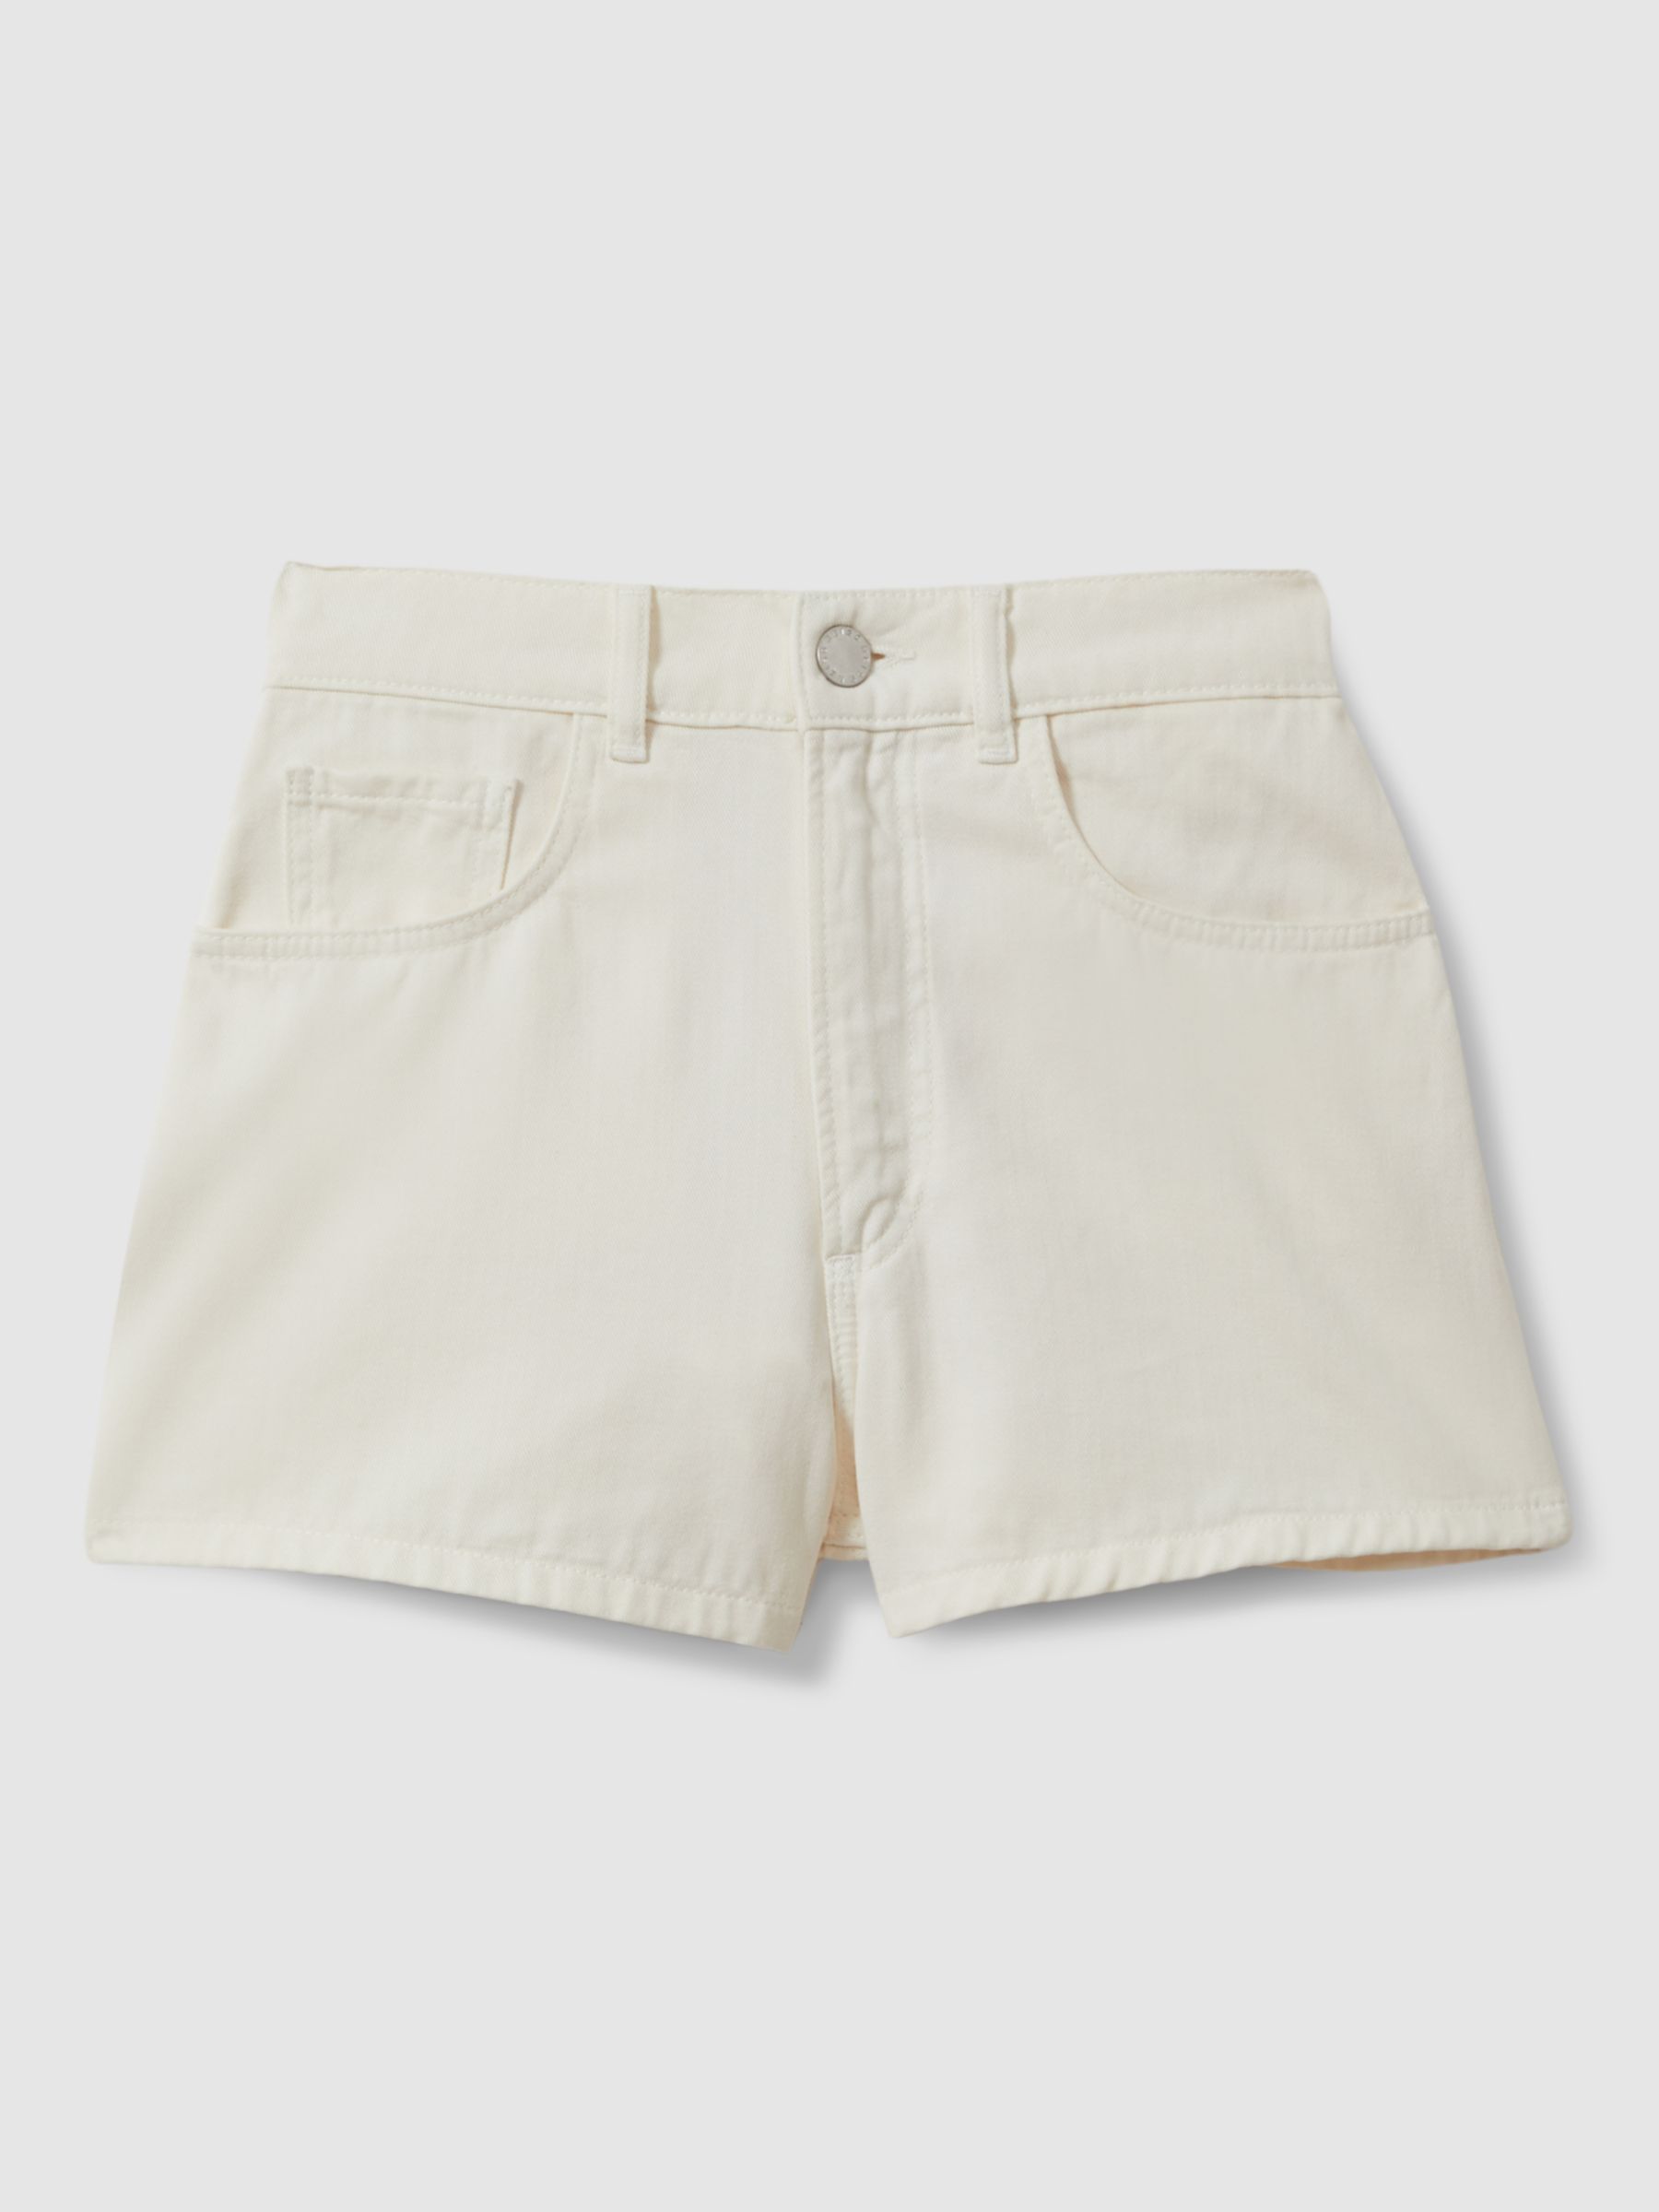 Reiss Colorado Cotton Blend Shorts, Cream, 6